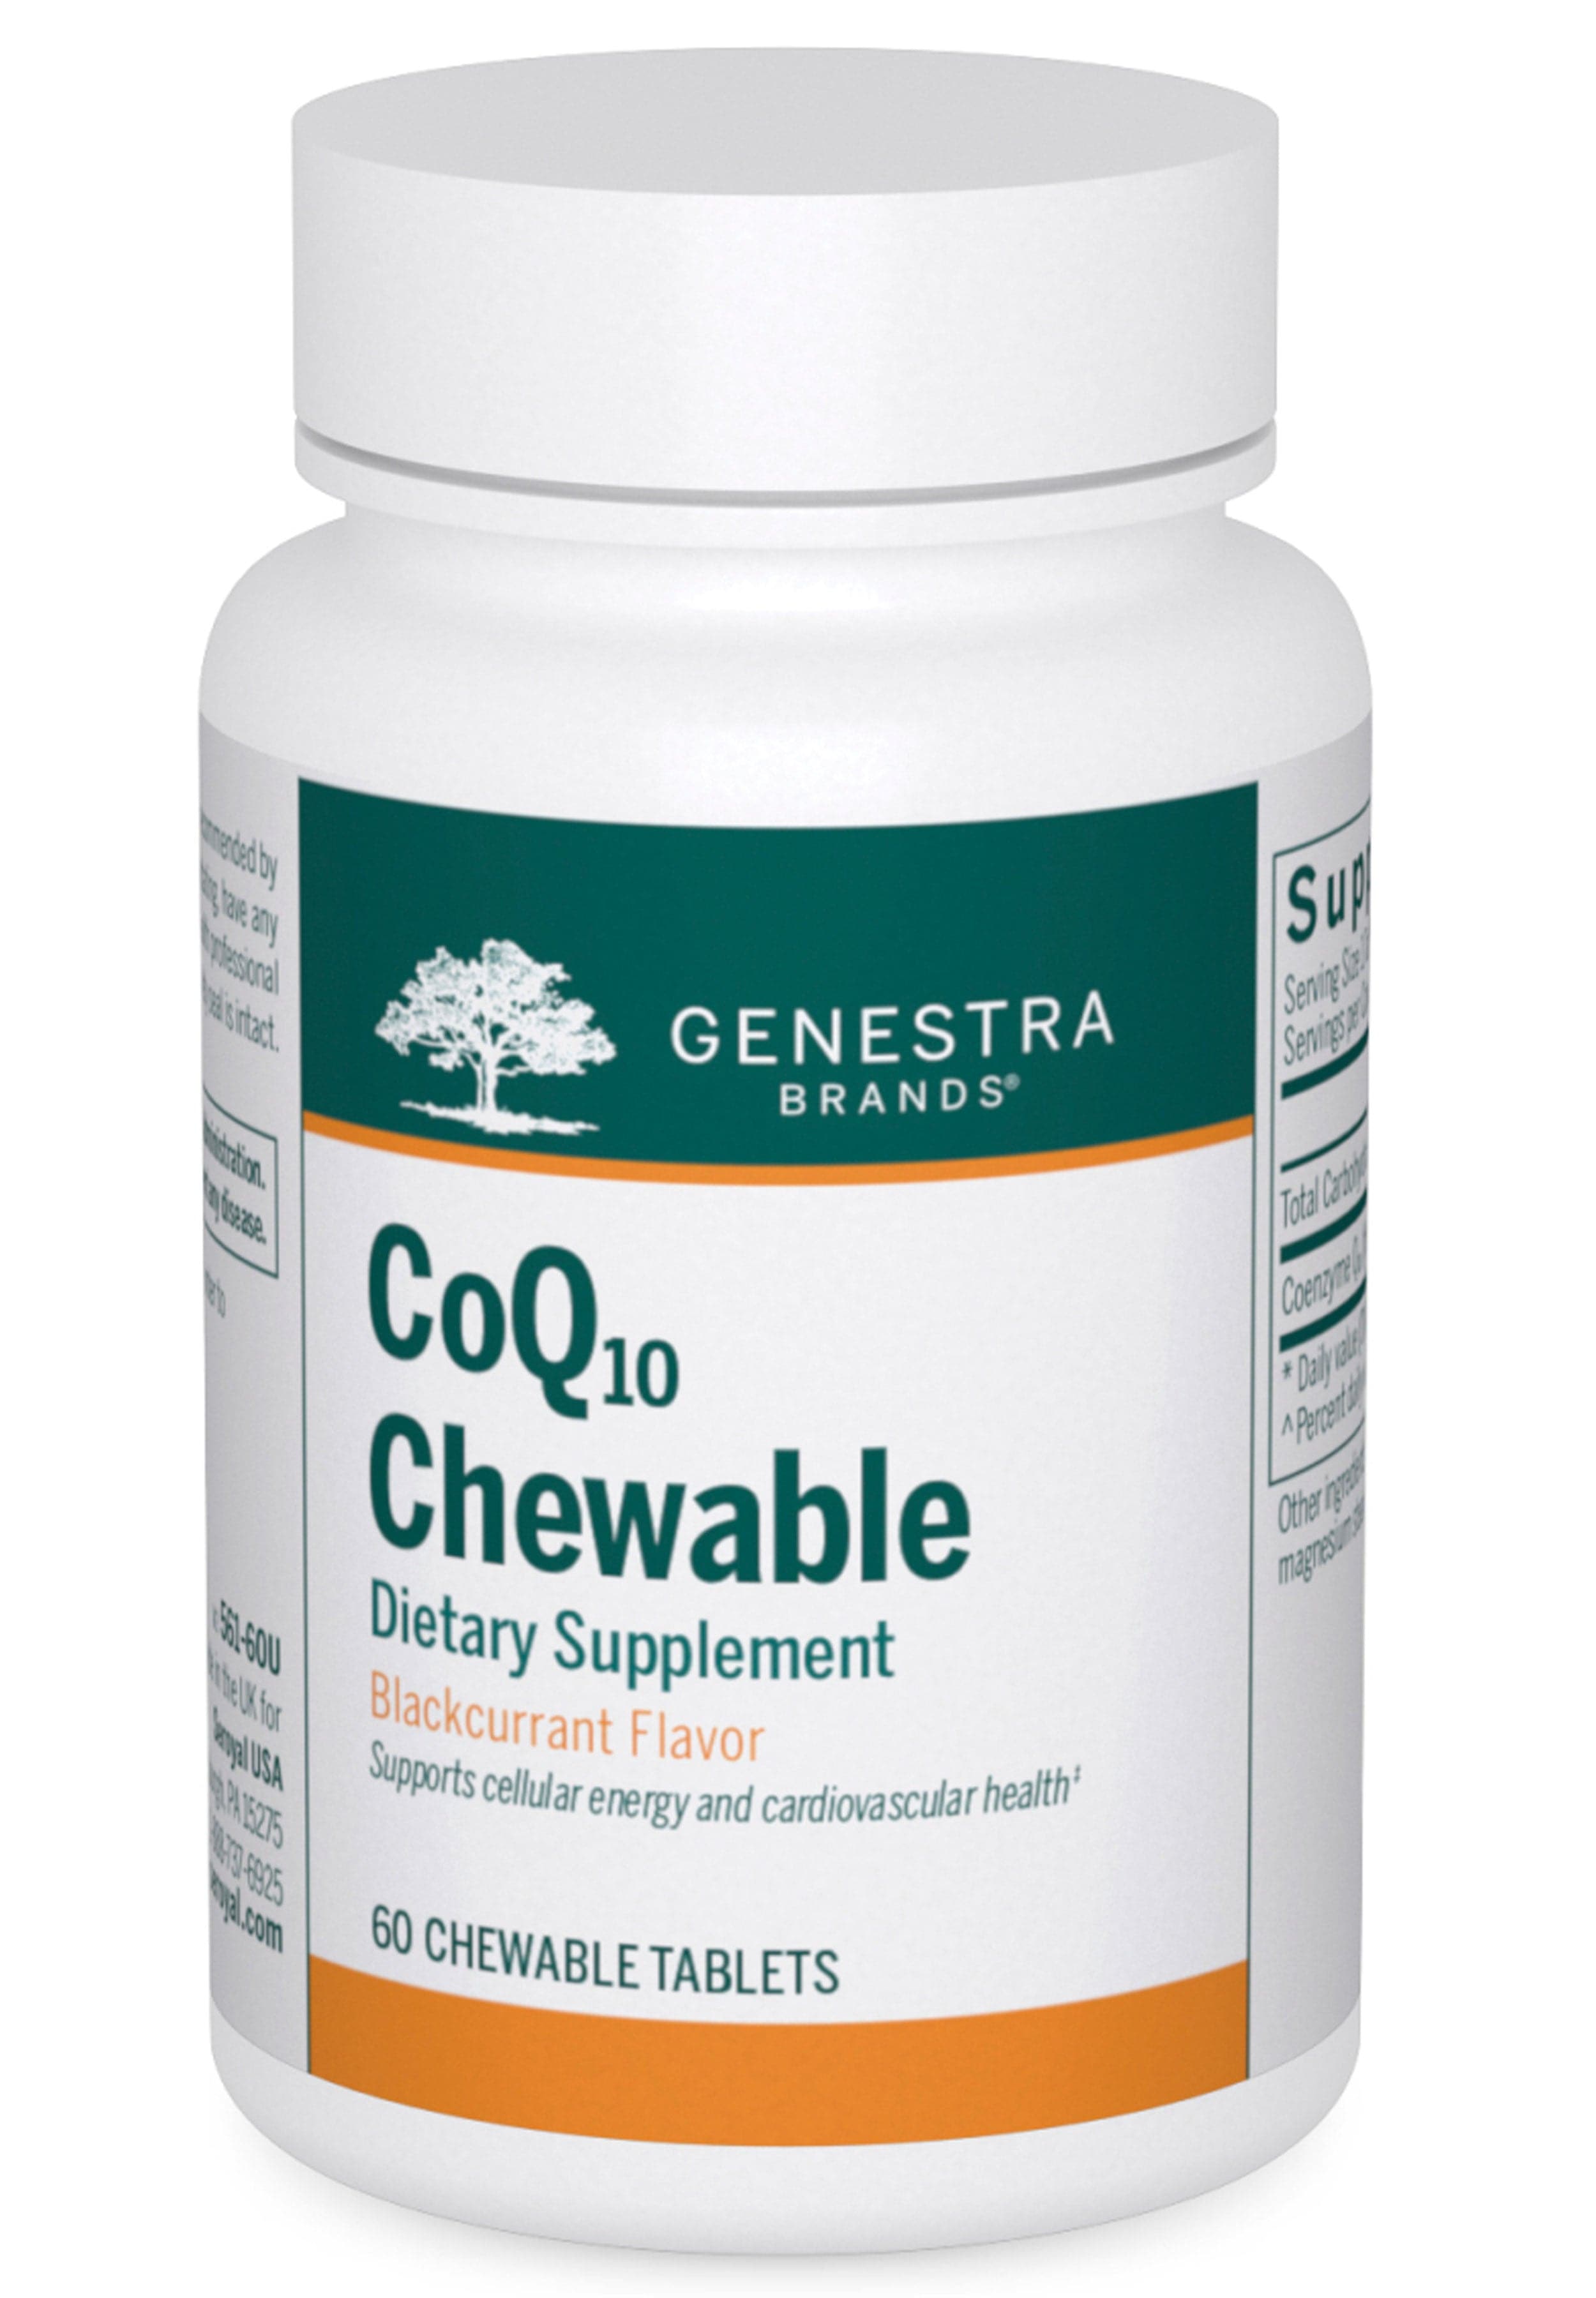 Genestra Brands CoQ10 Chewable